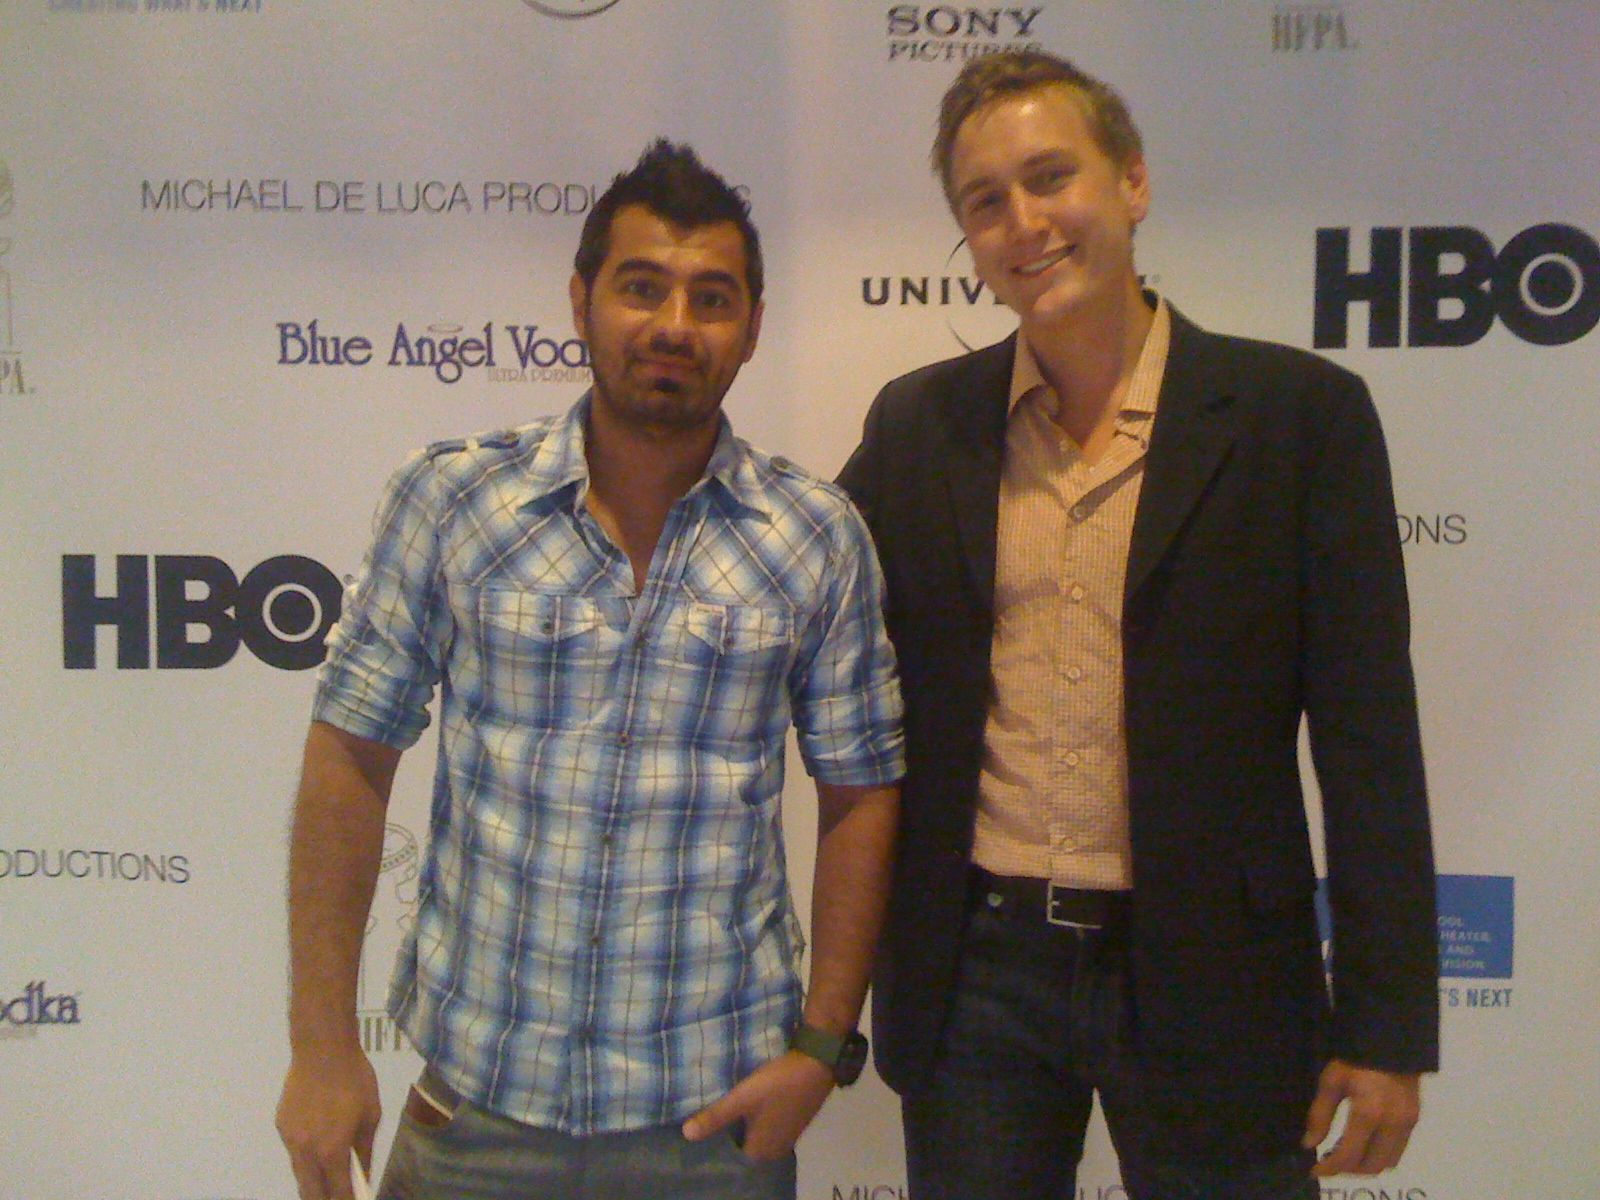 Karzan Kader and Glenn Lund. Los Angeles 2011.